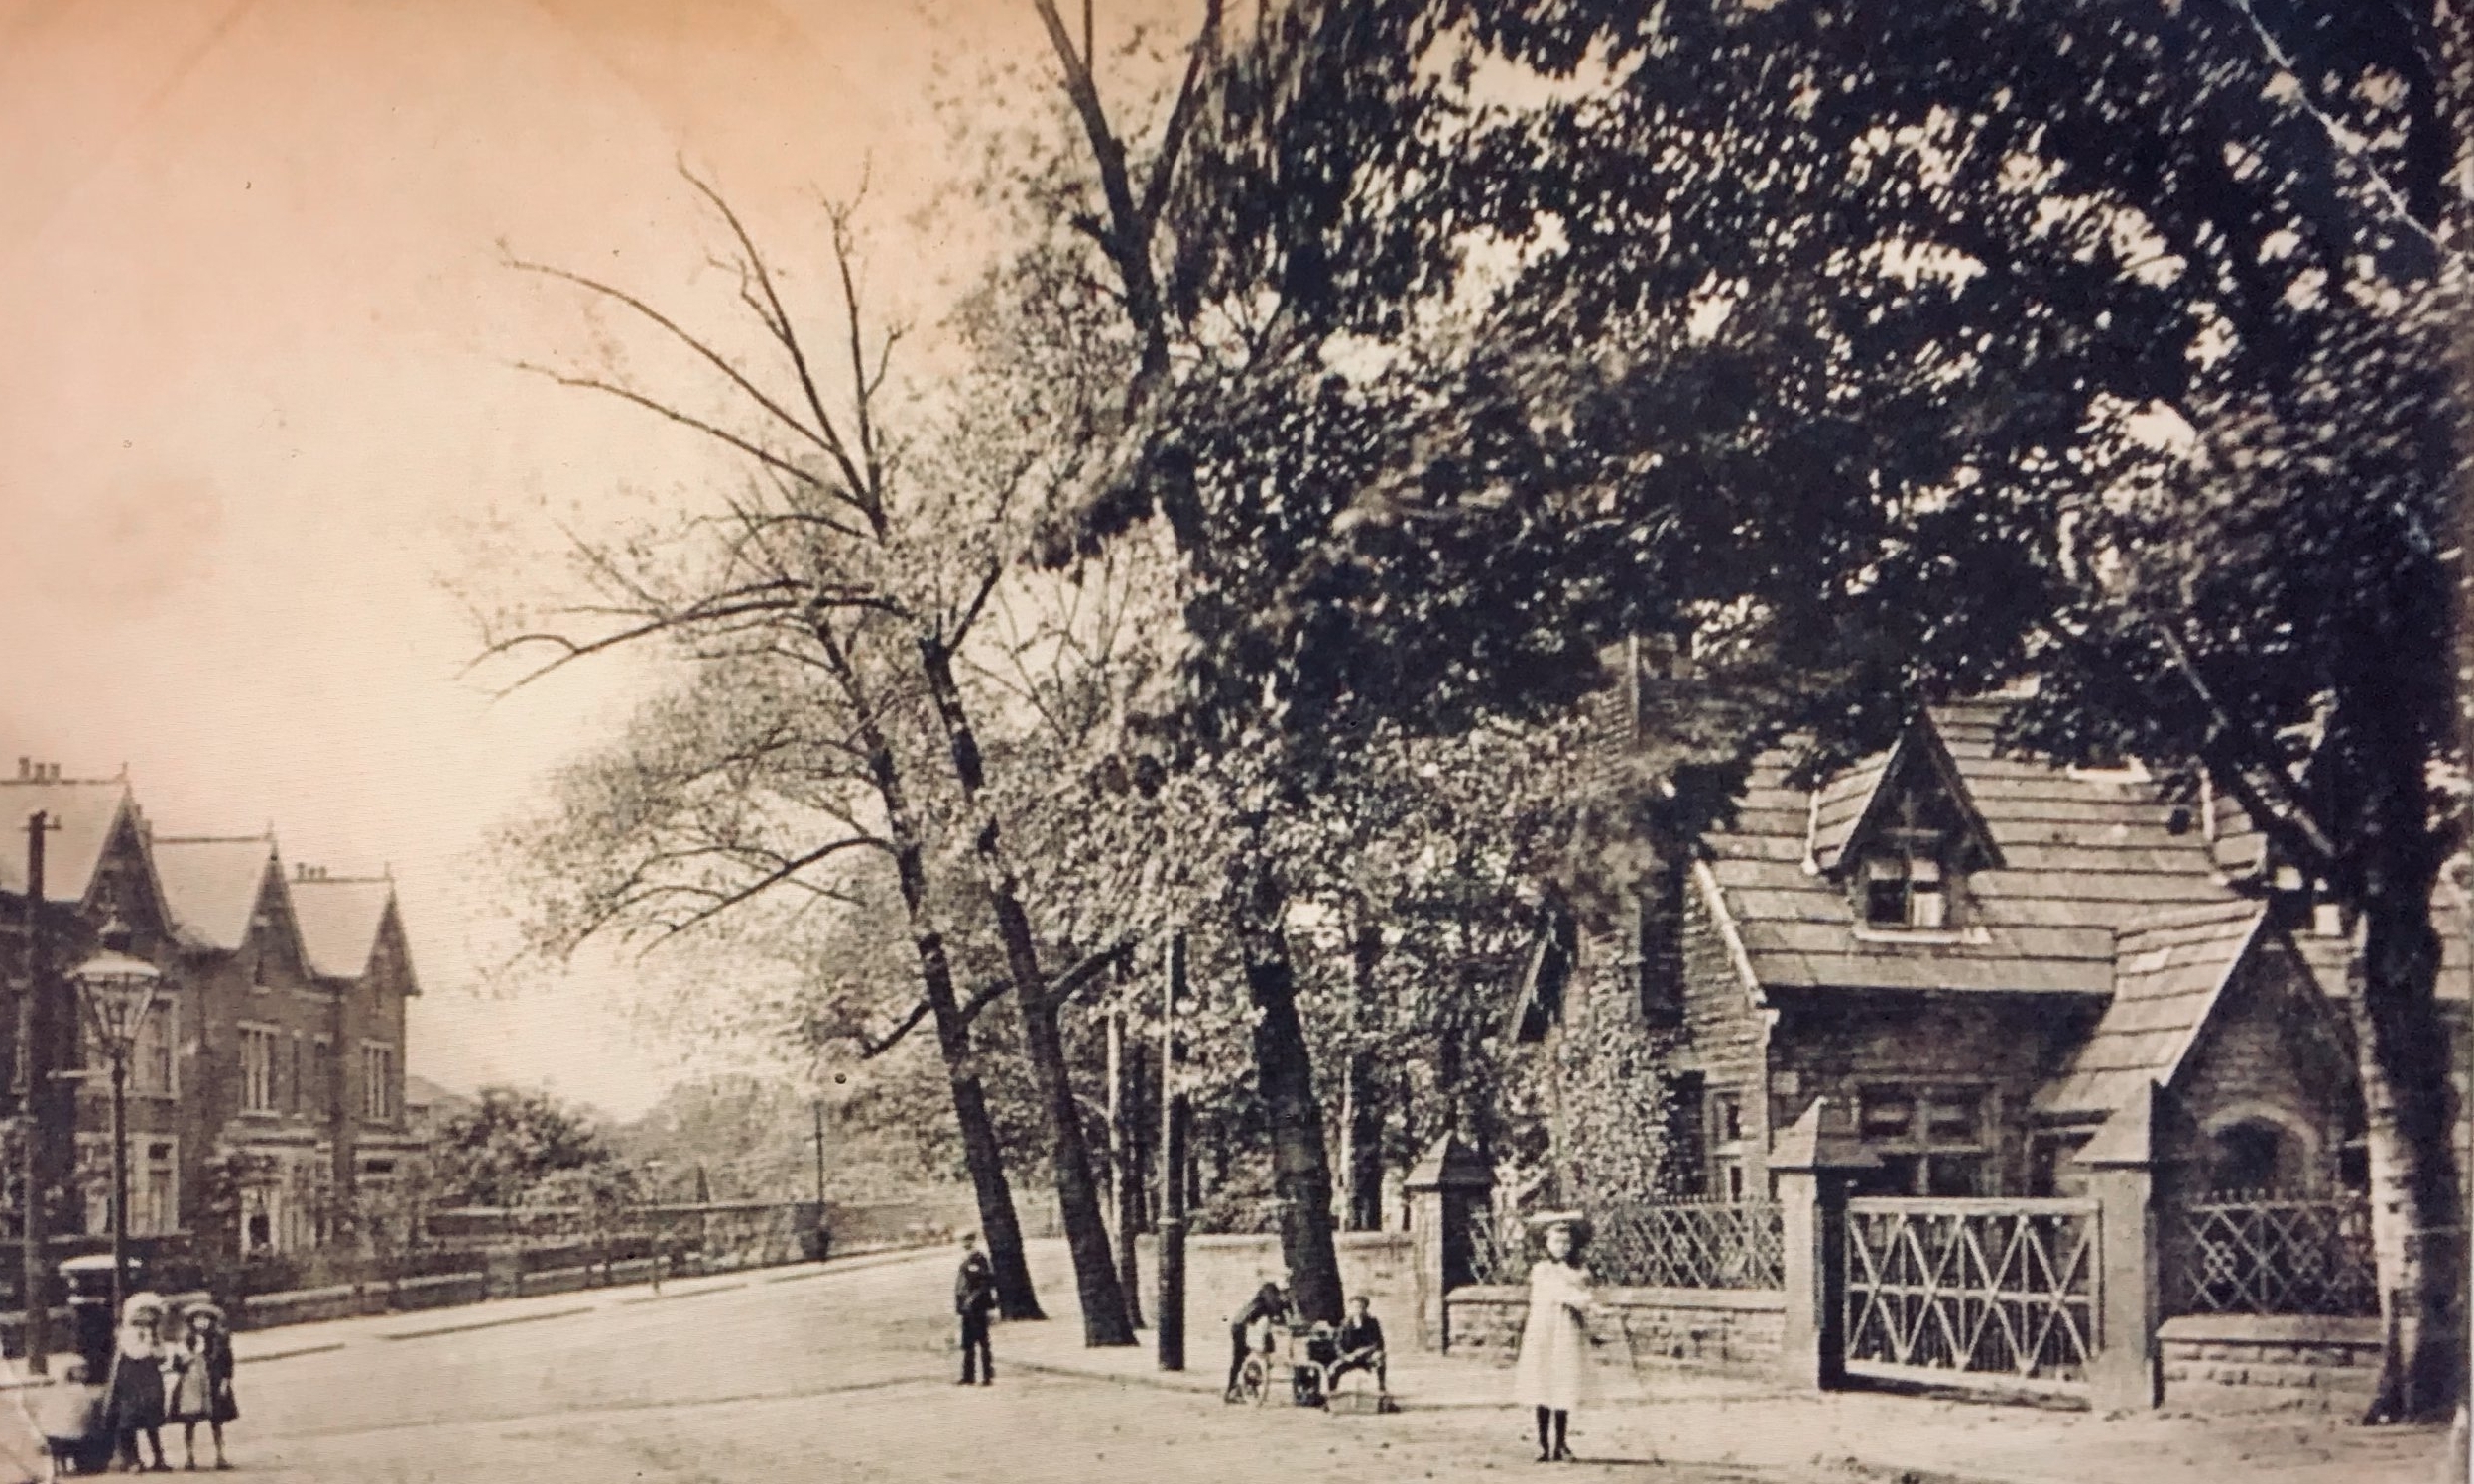 Gate House, Headingley House, Kirkstall Lane, circa 1900